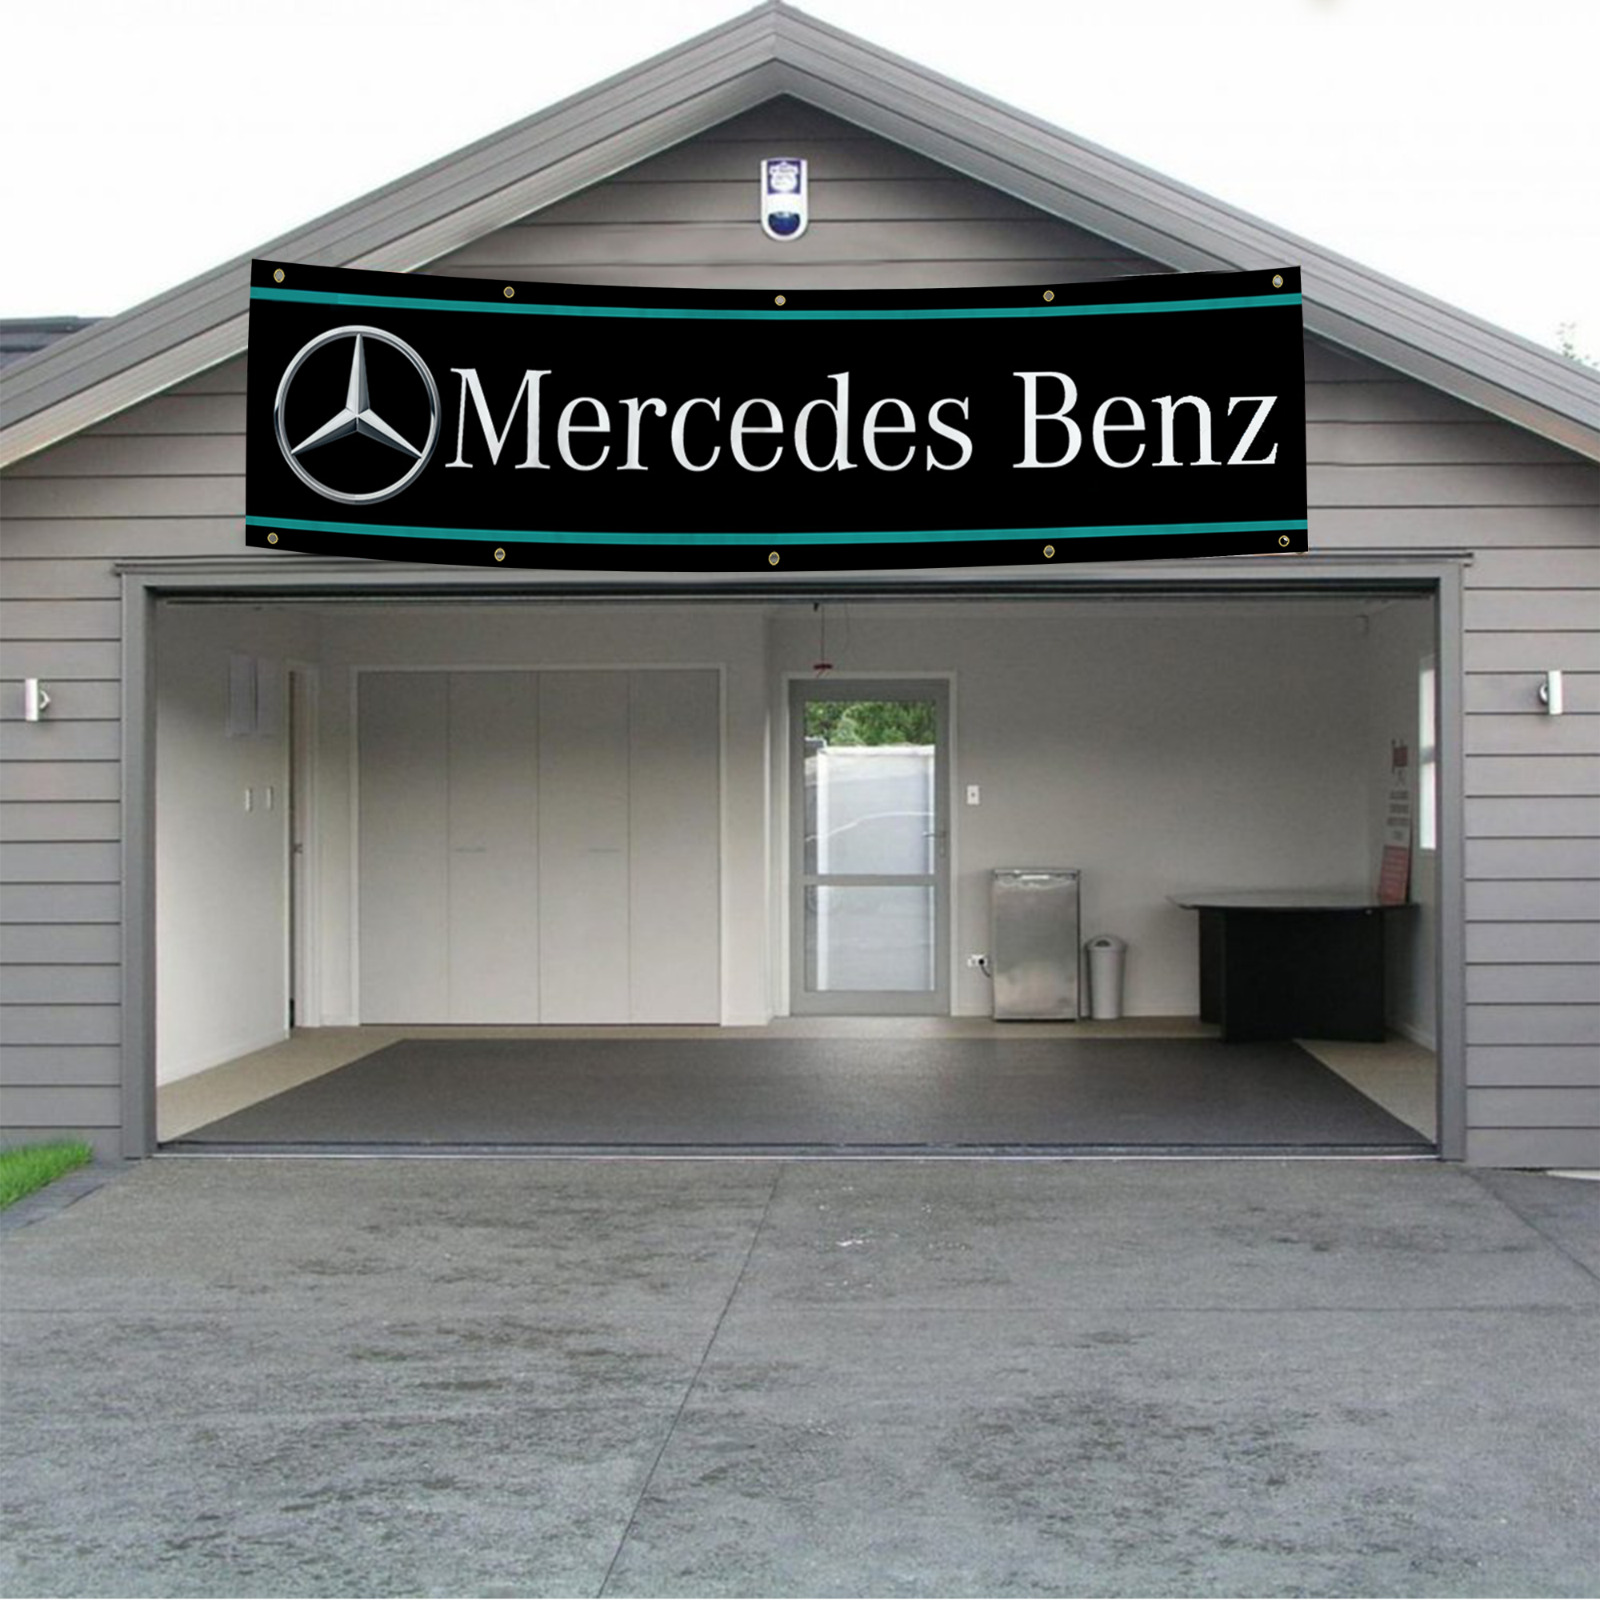 Mercedes Benz AMG 2x8 FT Banner Racing Flags Car Show Garage Wall Man Cave Decor